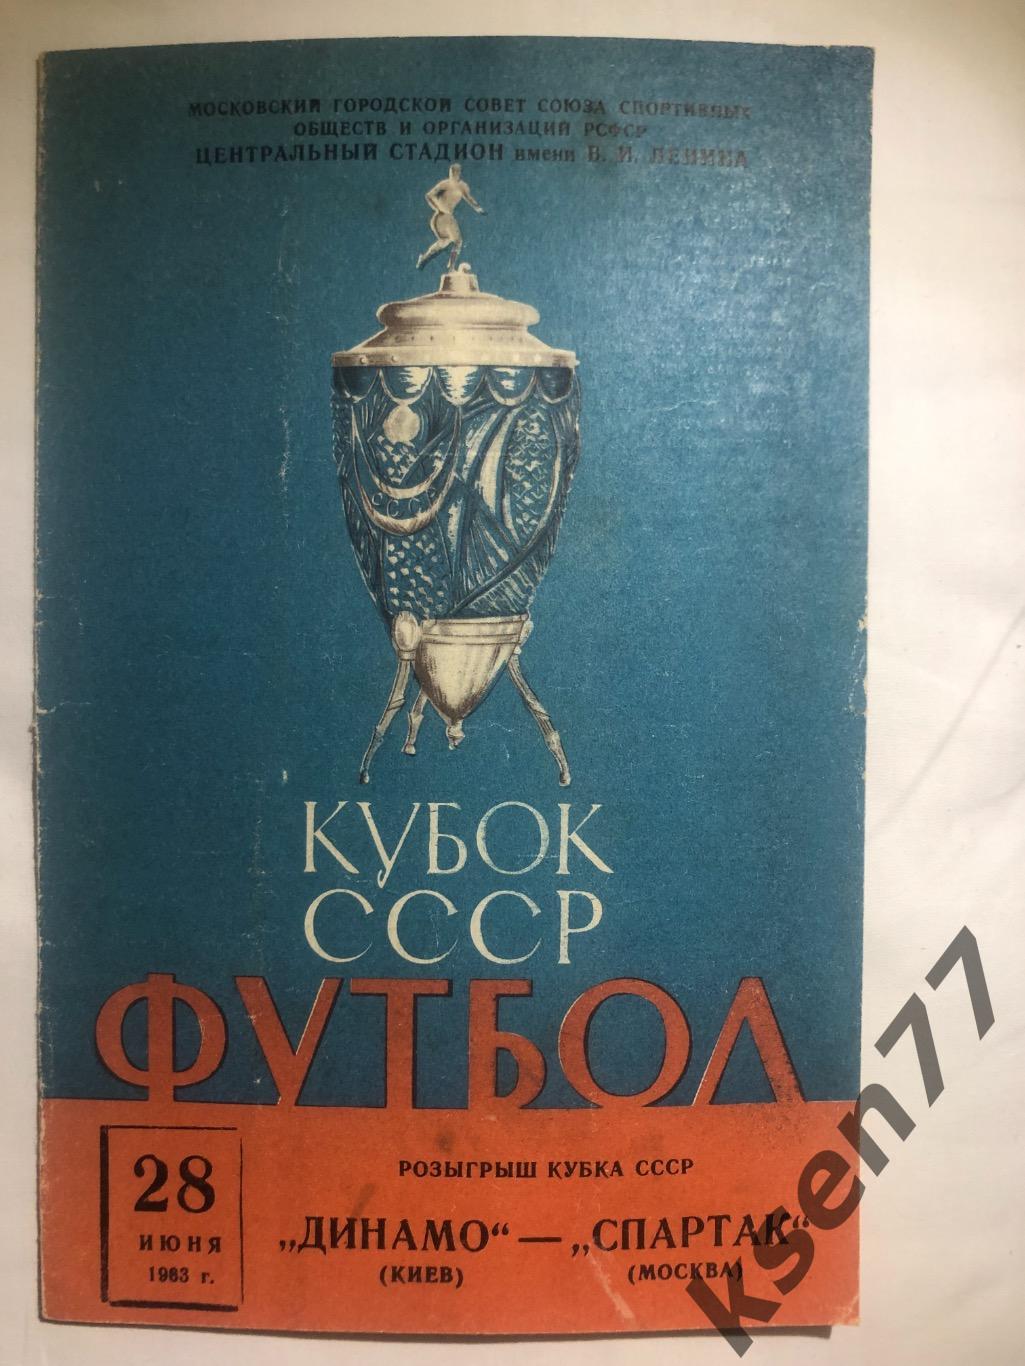 Спартак Москва - Динамо Киев -Кубок СССР - 28.06.1963.